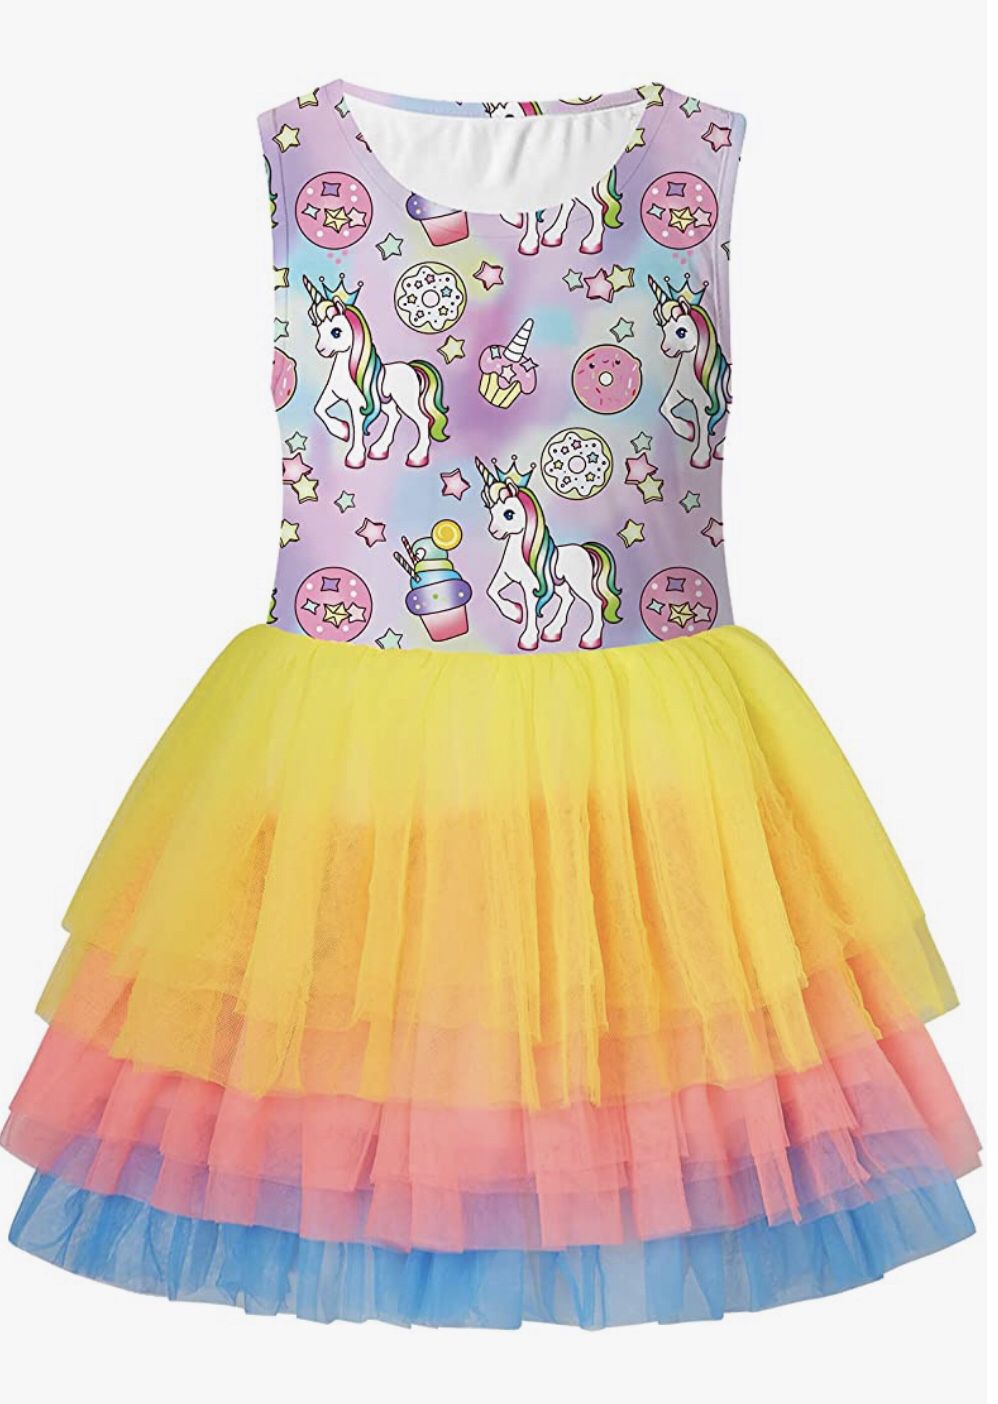 Unicorn Tutu Dress 5-6 Yrs (Brand New)